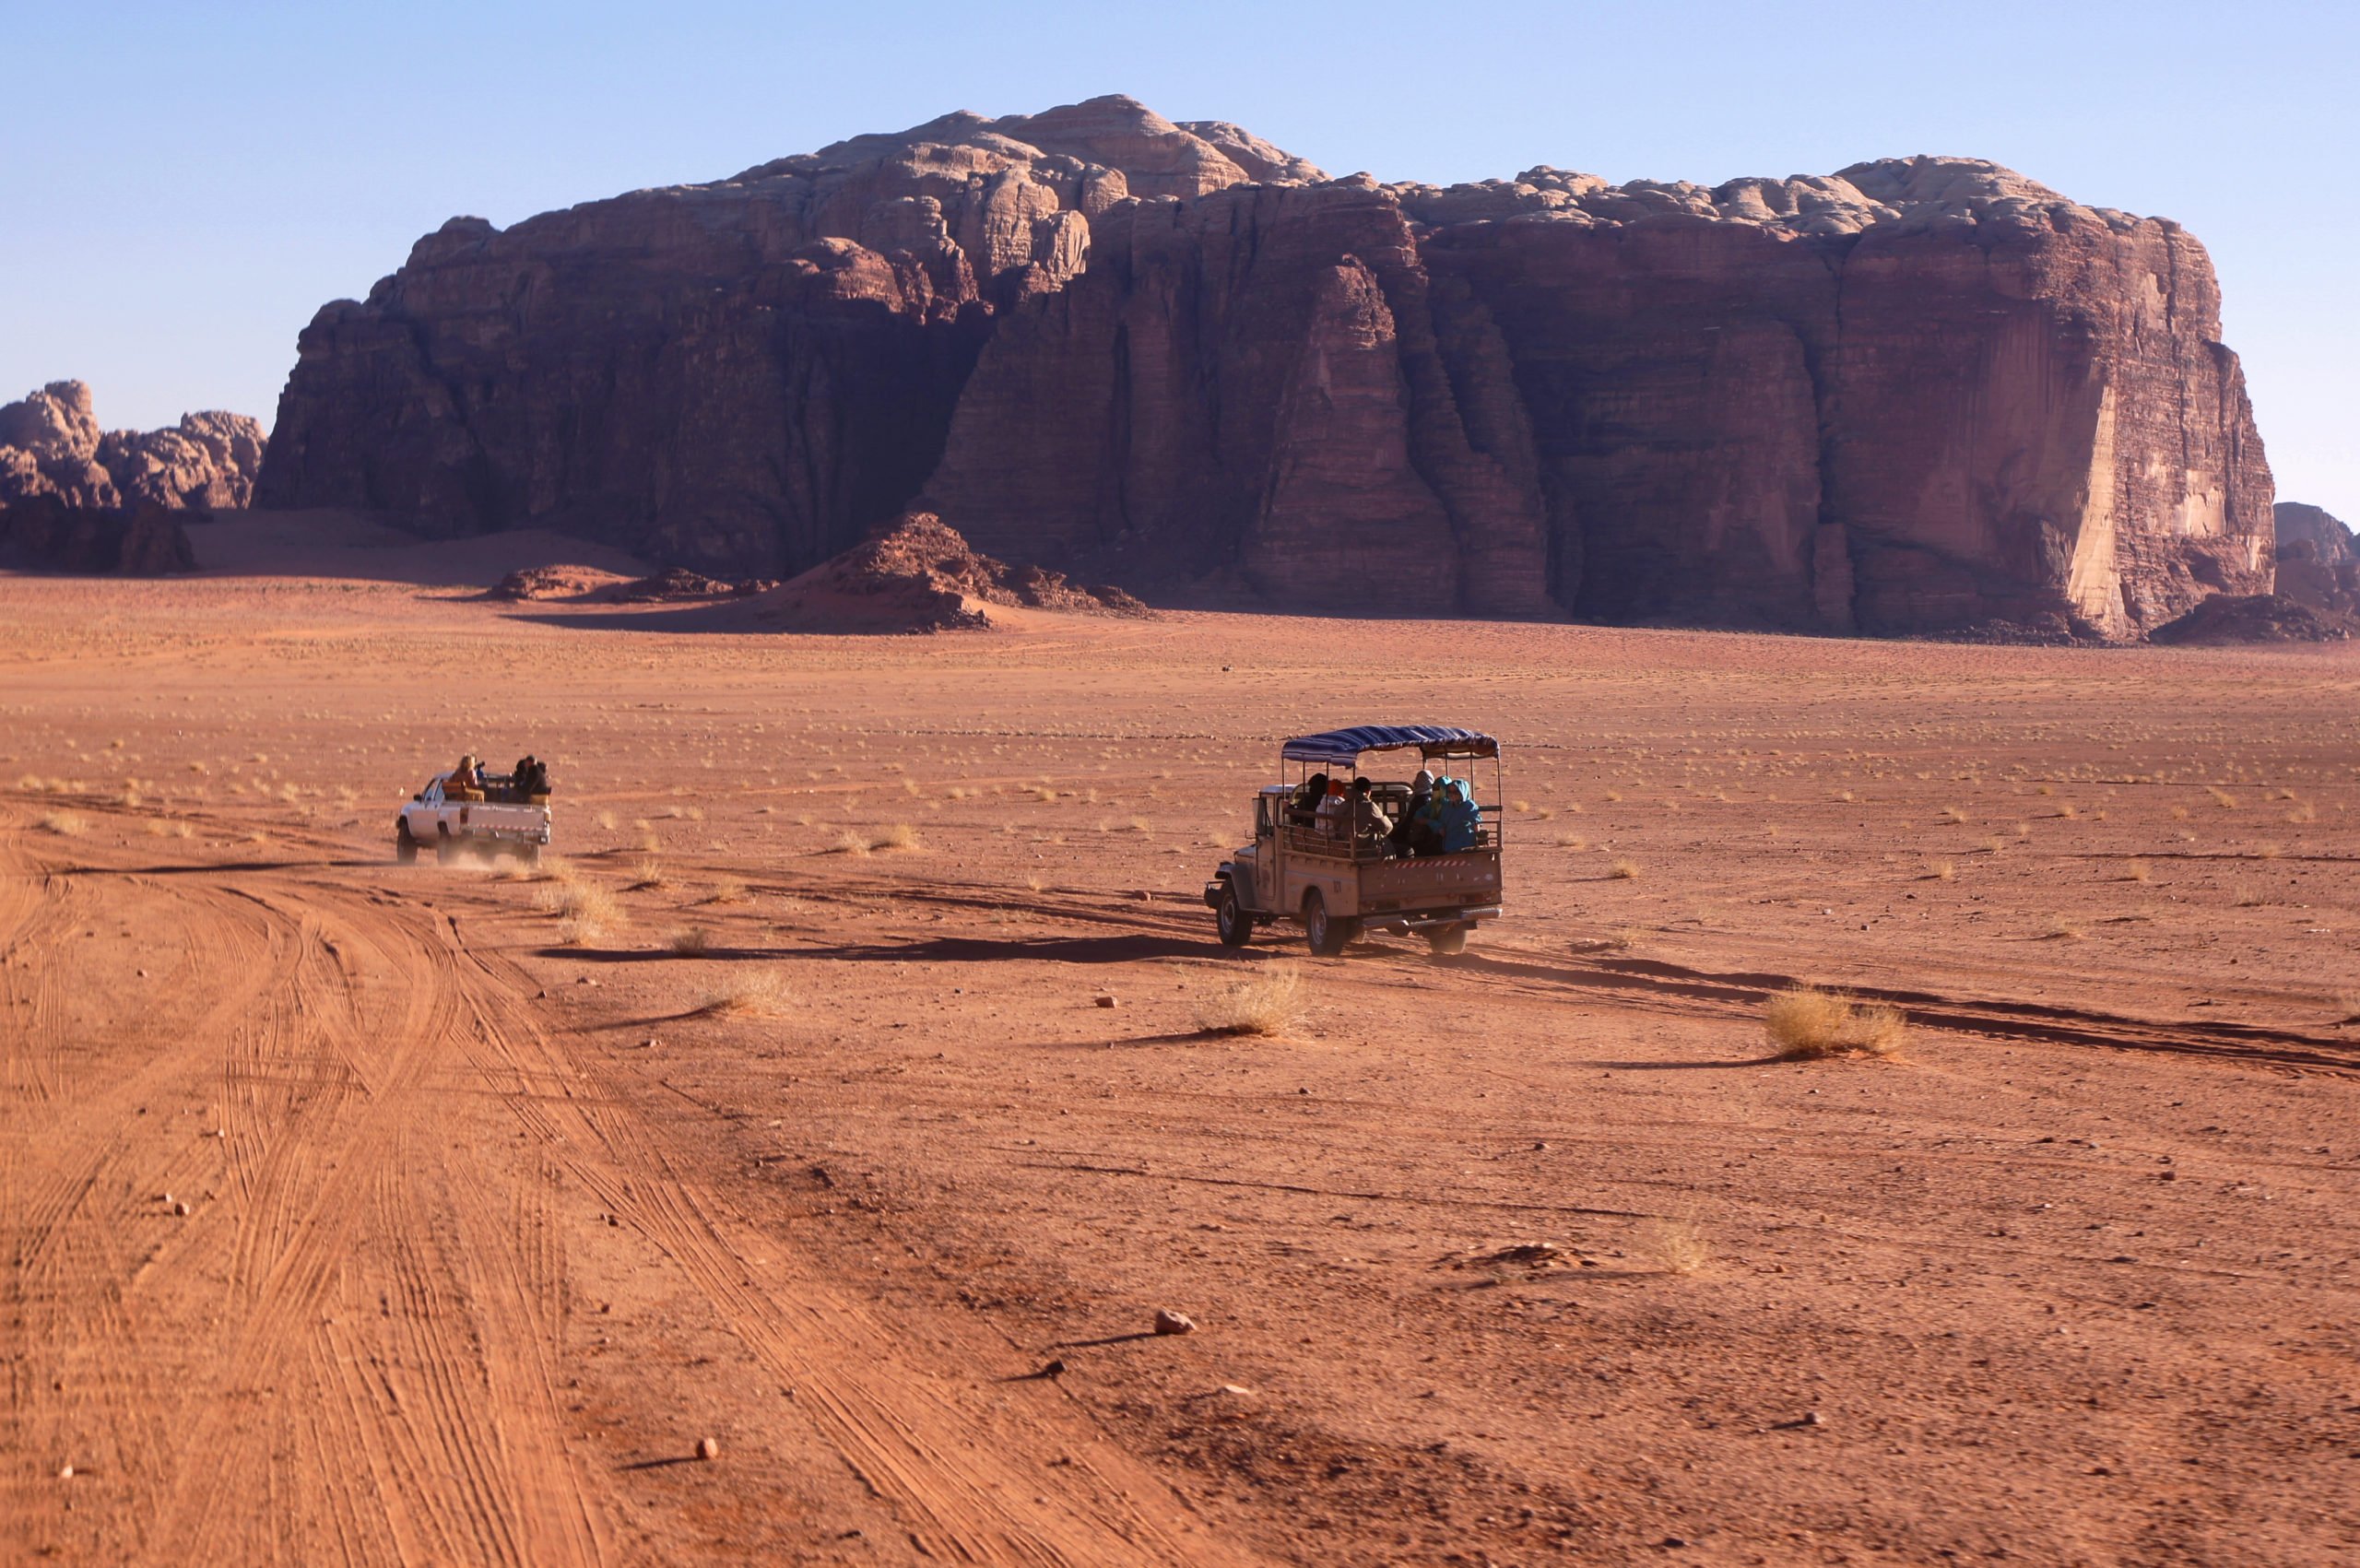 jeep safari tour wadi rum